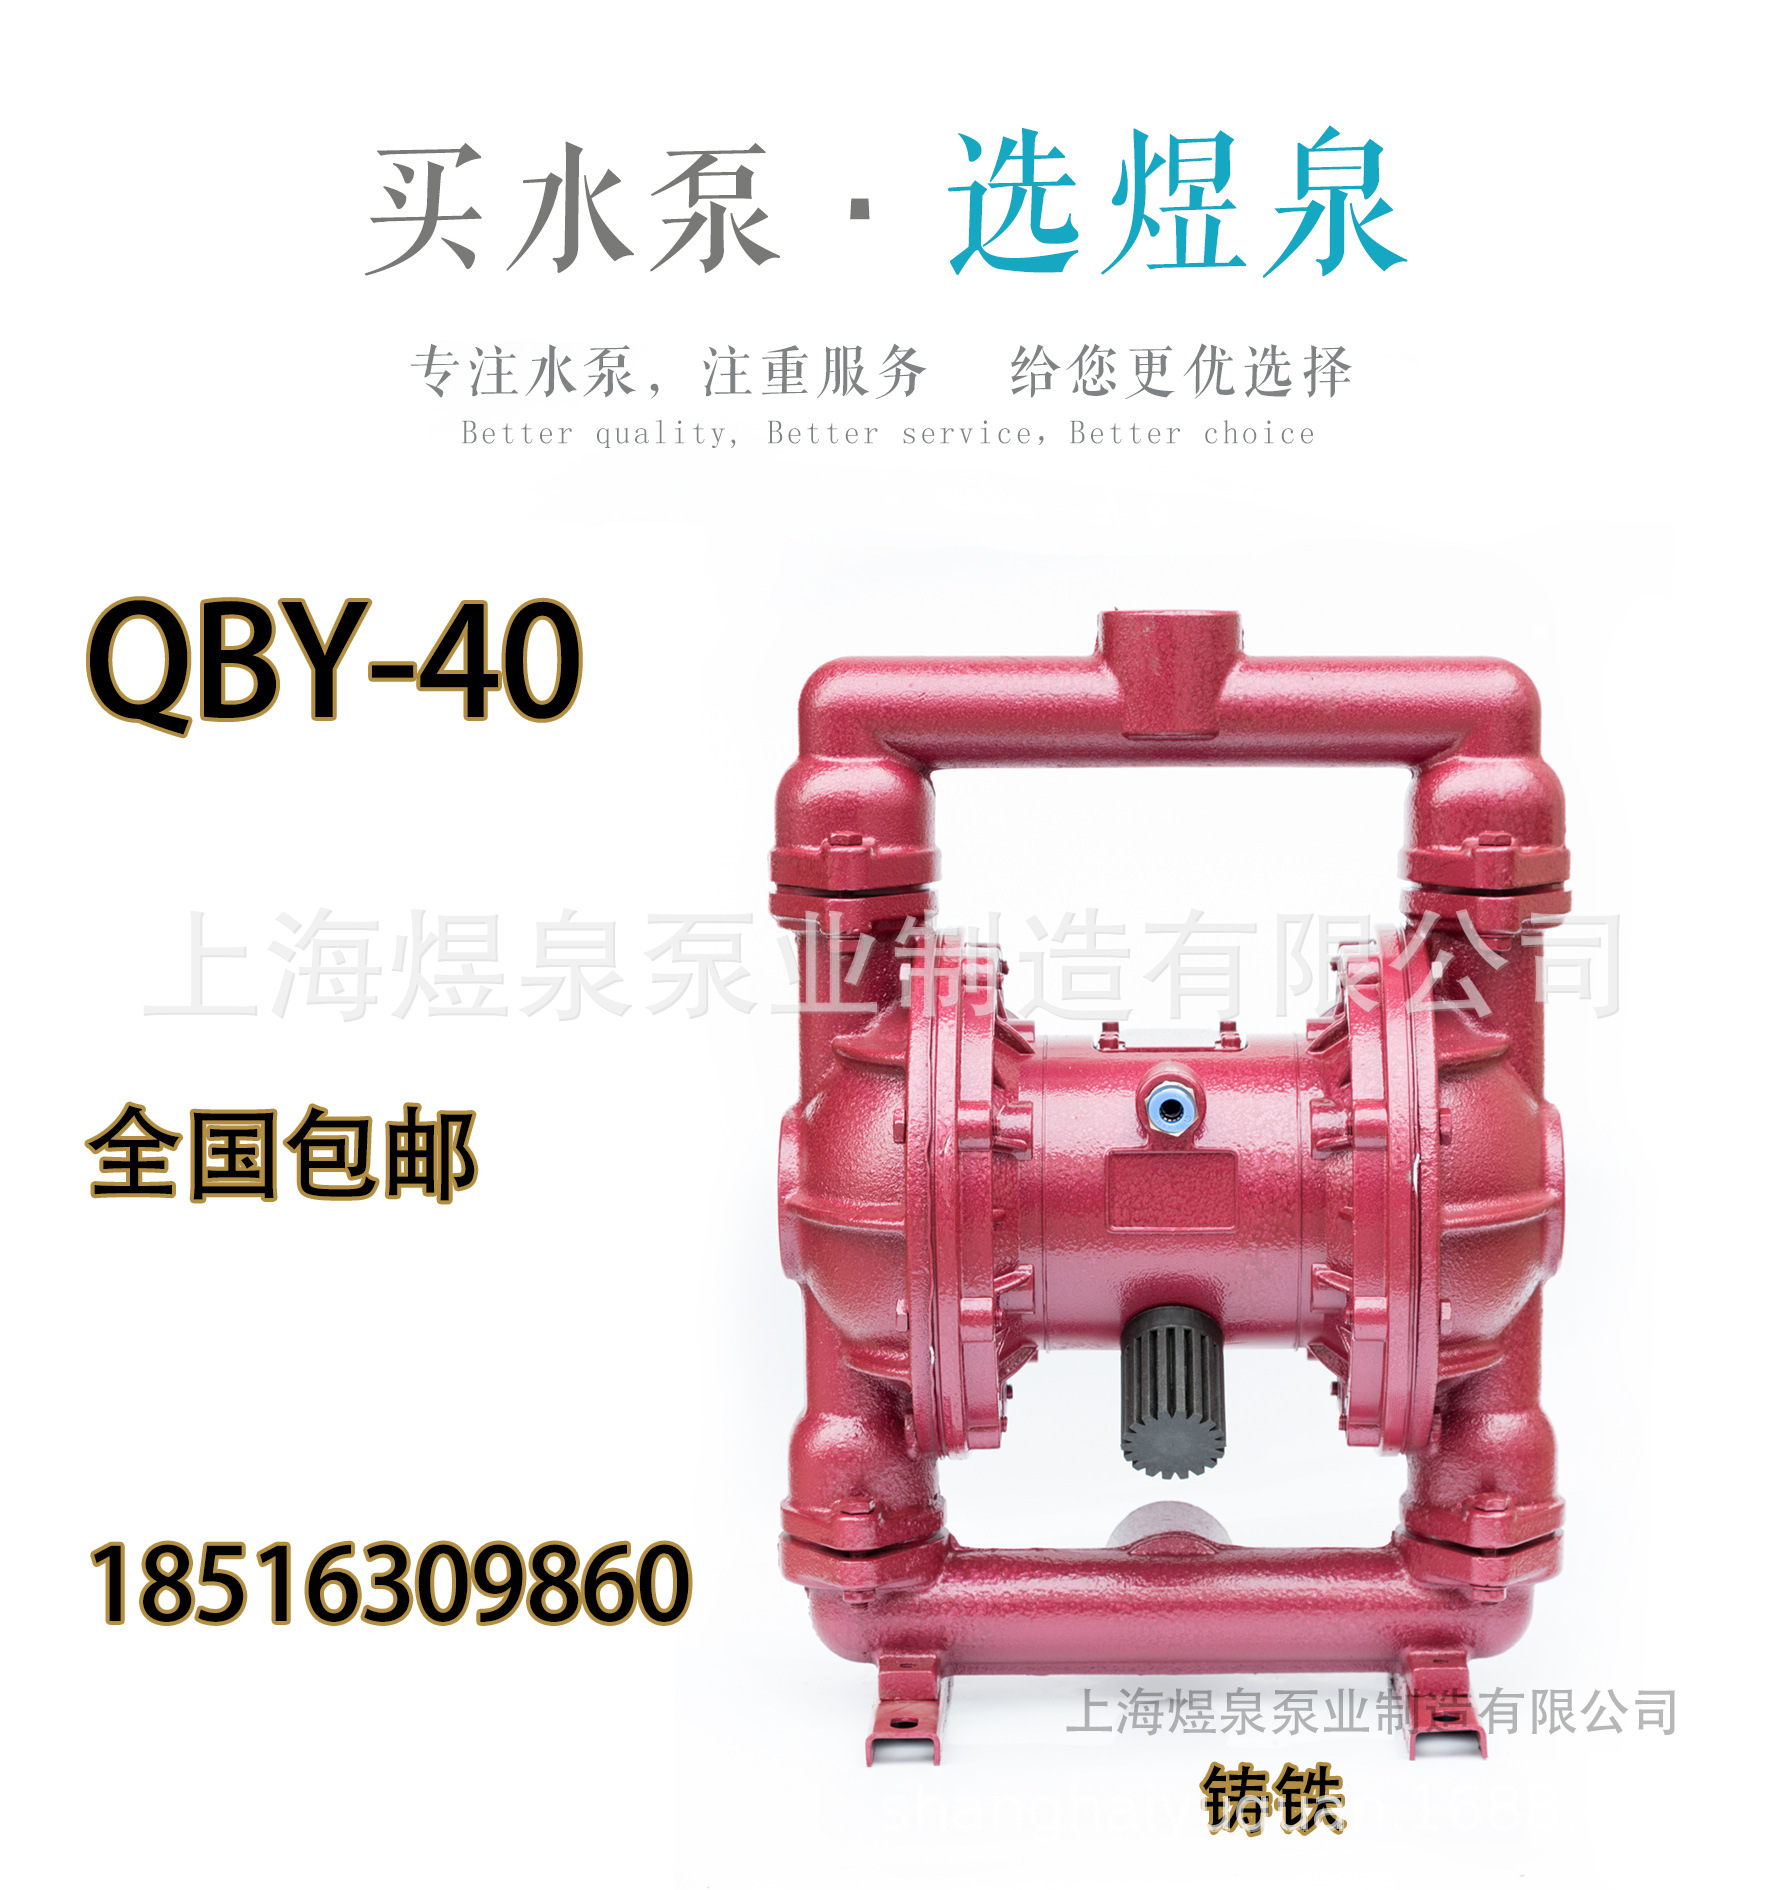 QBY-40 铸铁主页照片.jpg